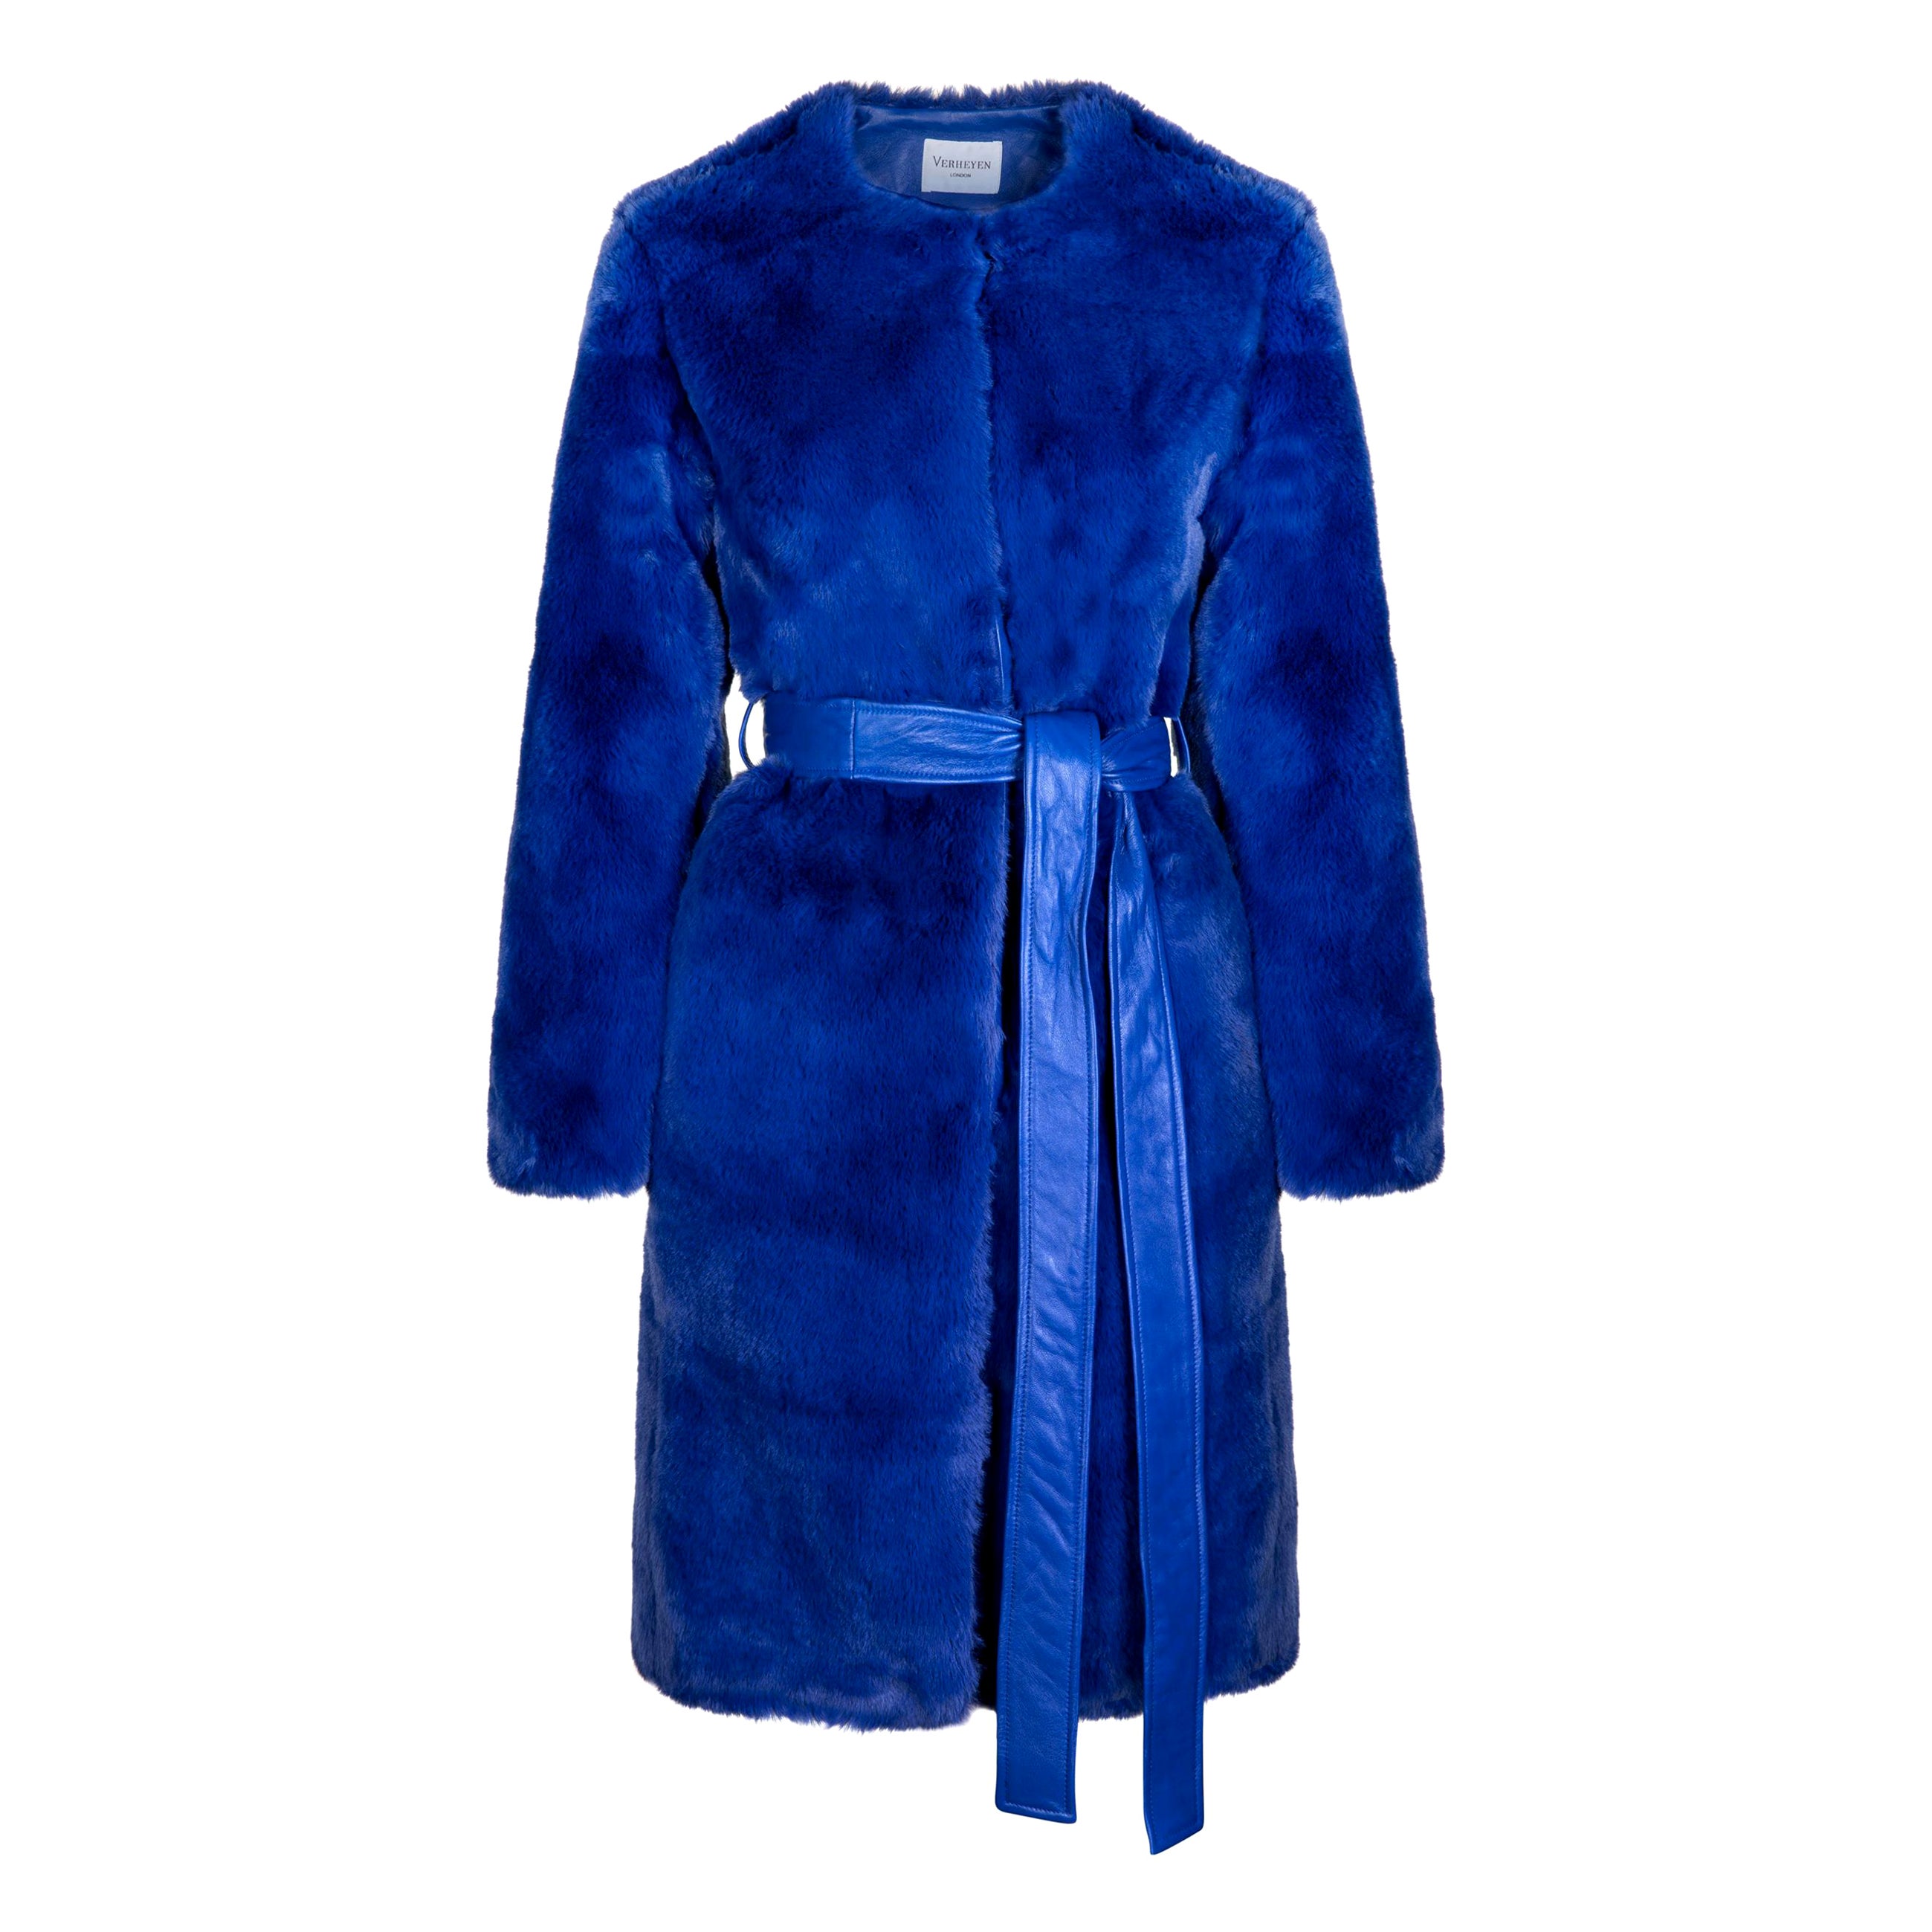 Verheyen London Serena  Collarless Faux Fur Coat in Blue - Size uk 12  For Sale